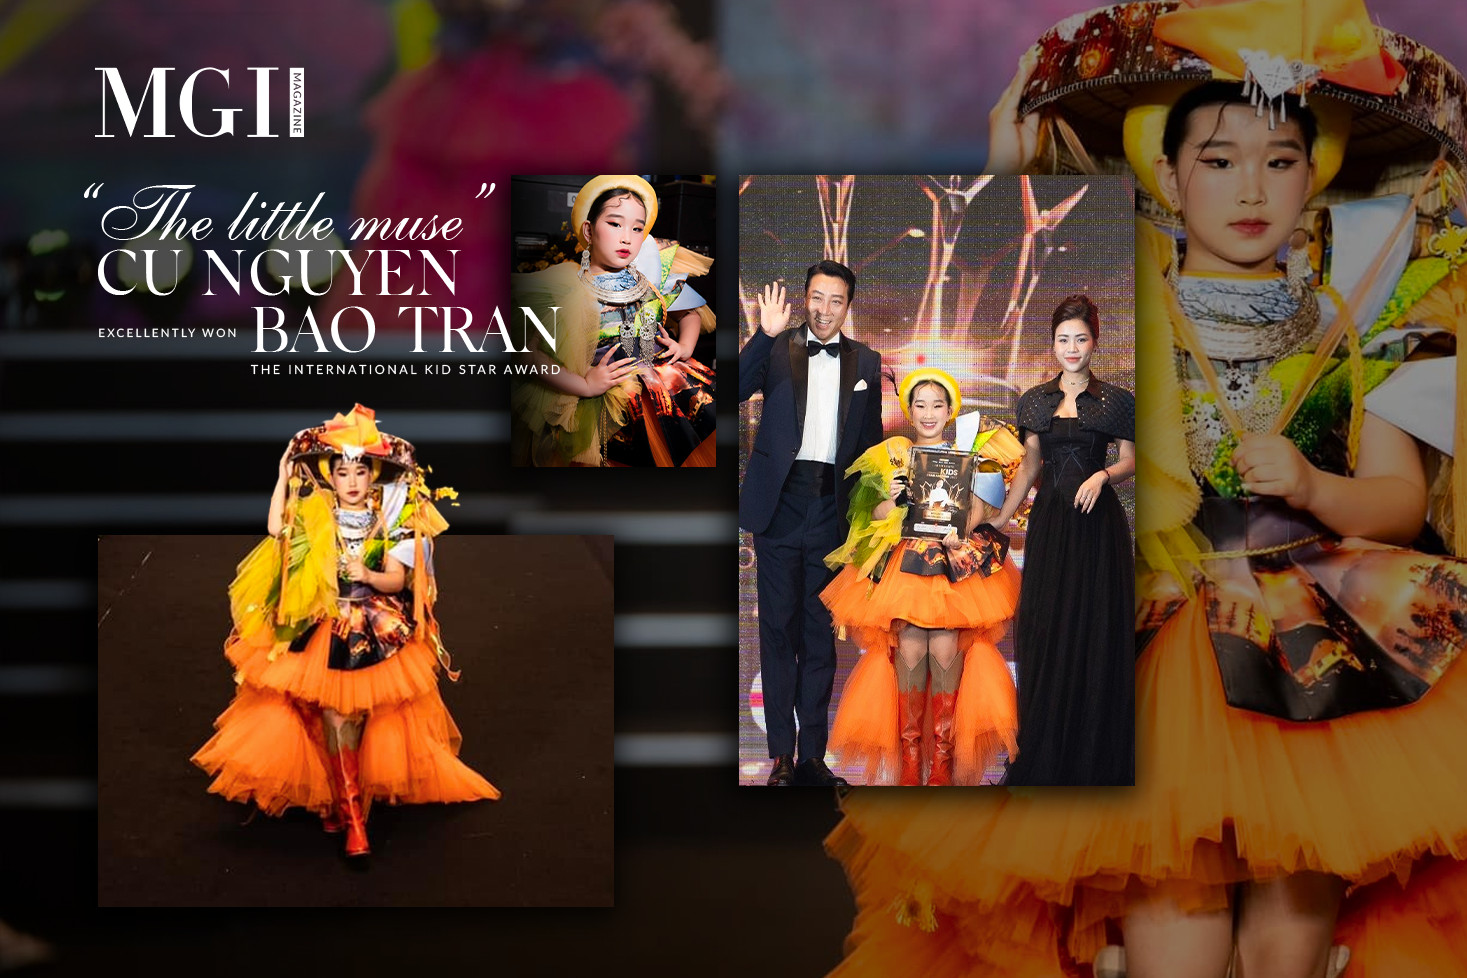 Cu Nguyen Bao Tran - The outstanding "little muse" won the International Kids Star Award 2023